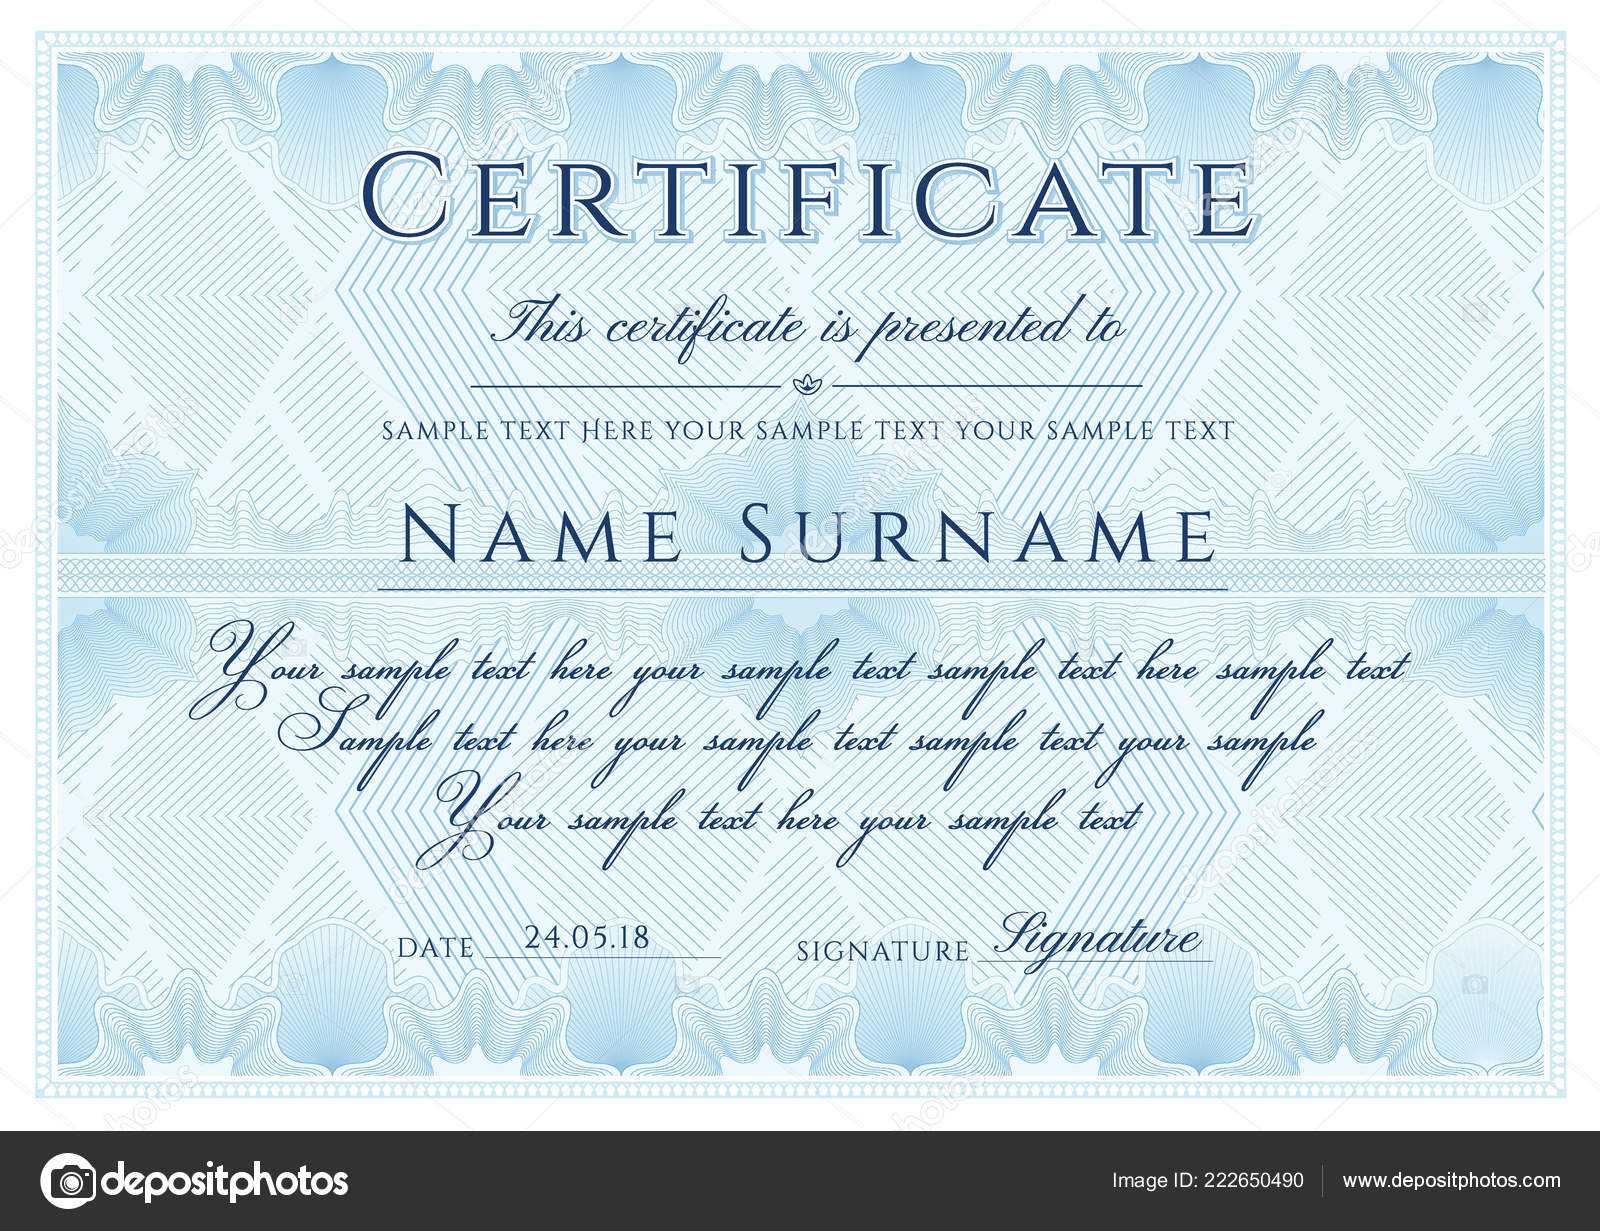 Formal Certificate Template | Certificate Template Formal Intended For Formal Certificate Of Appreciation Template